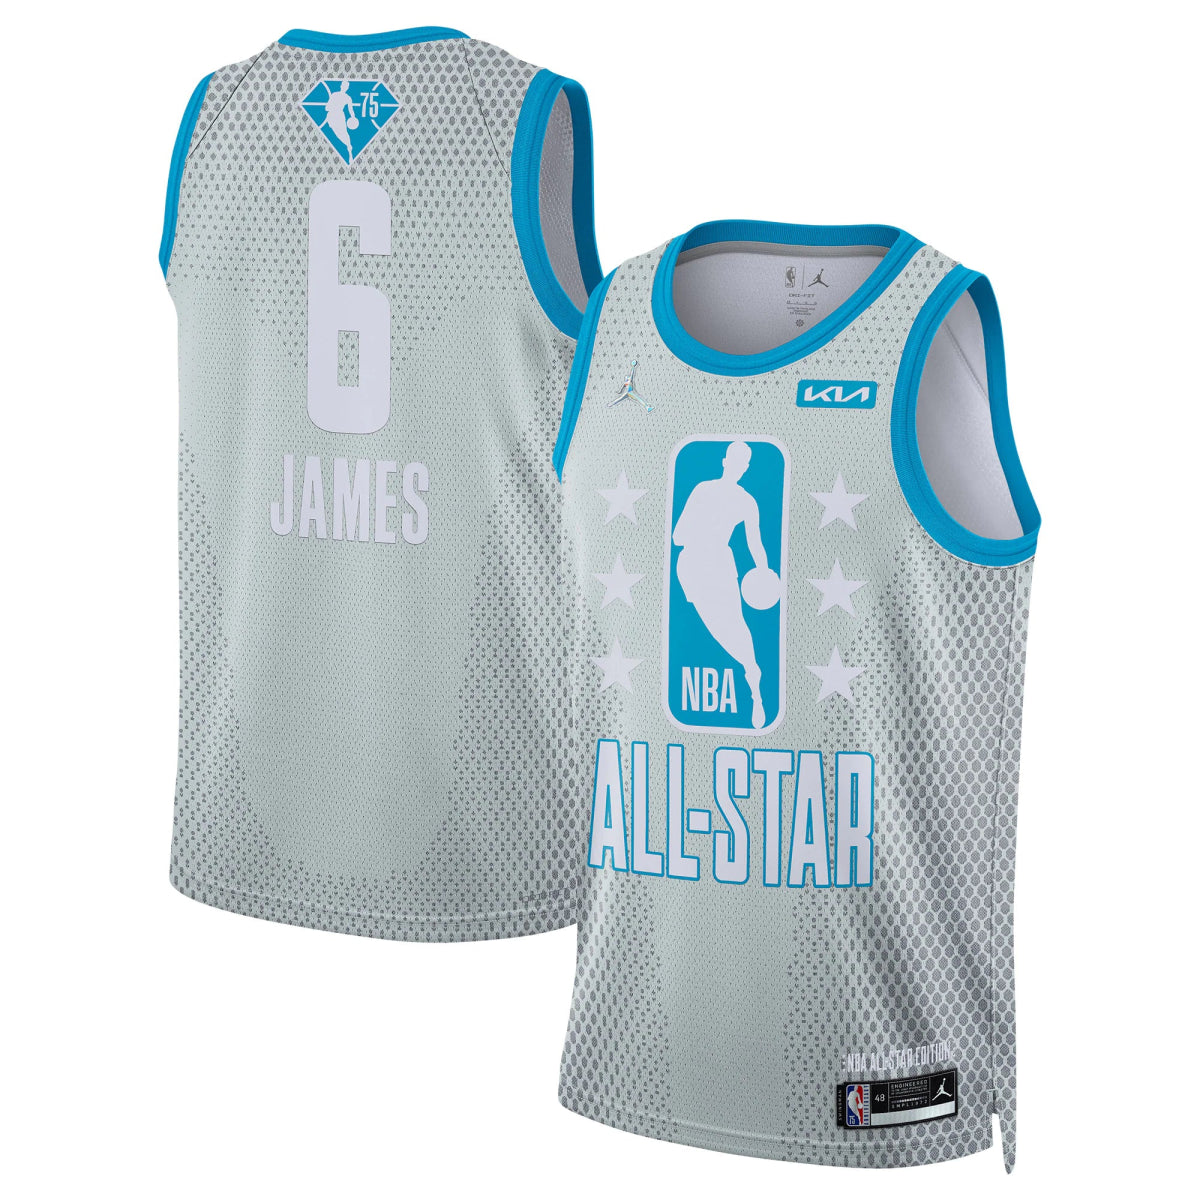 NBA NBA All Star Merchandise, Basketball Collection, NBA NBA All Star  Merchandise Gear